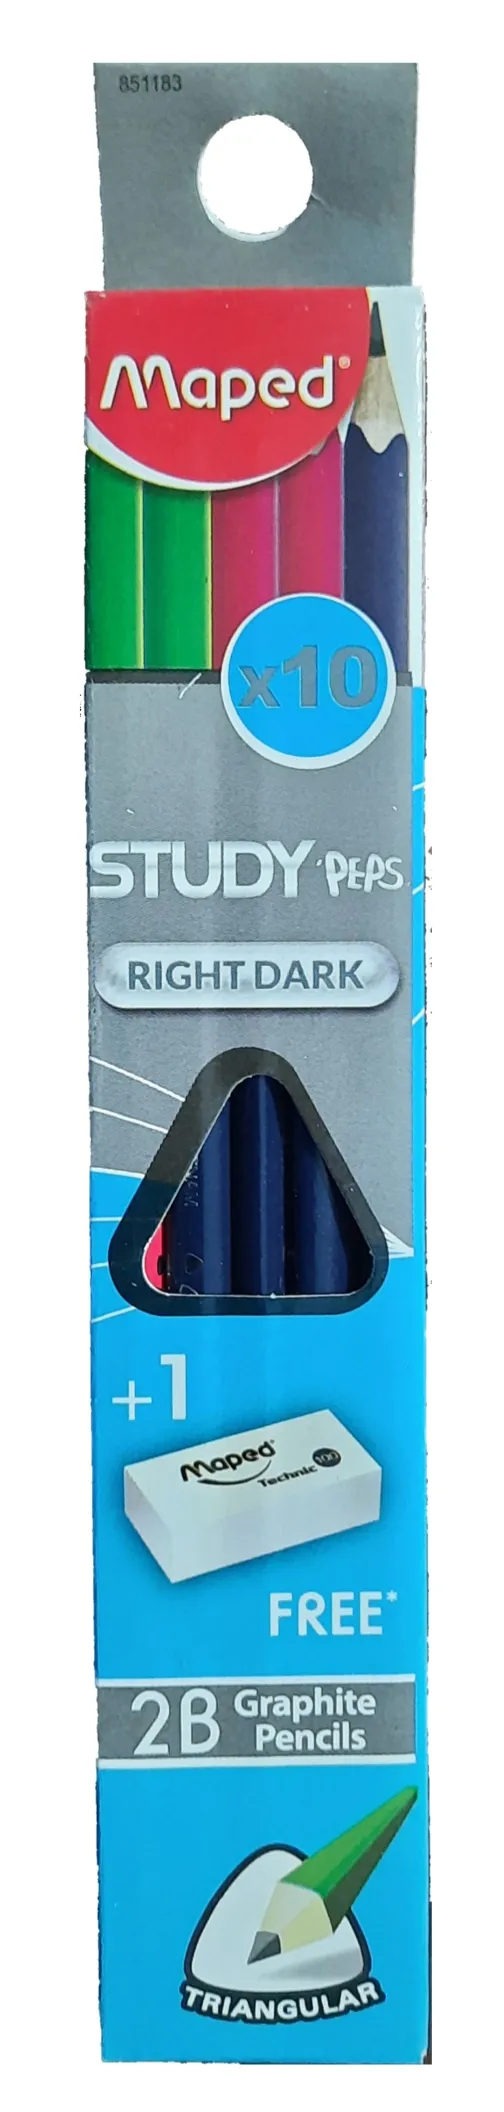 Maped Study Peps Right Dark Traigular 2B Graphite Pencils pack of 10 with 1 Eraser Free